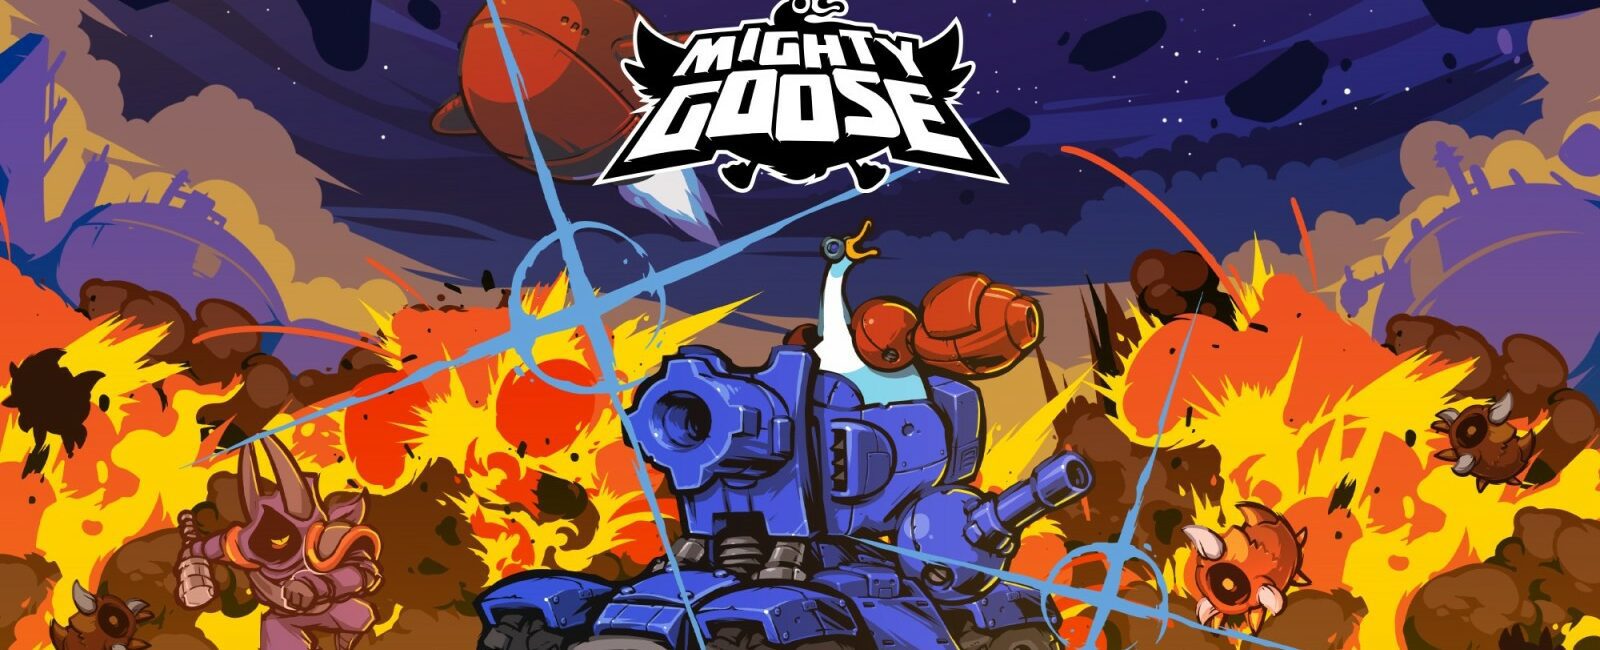 mighty goose